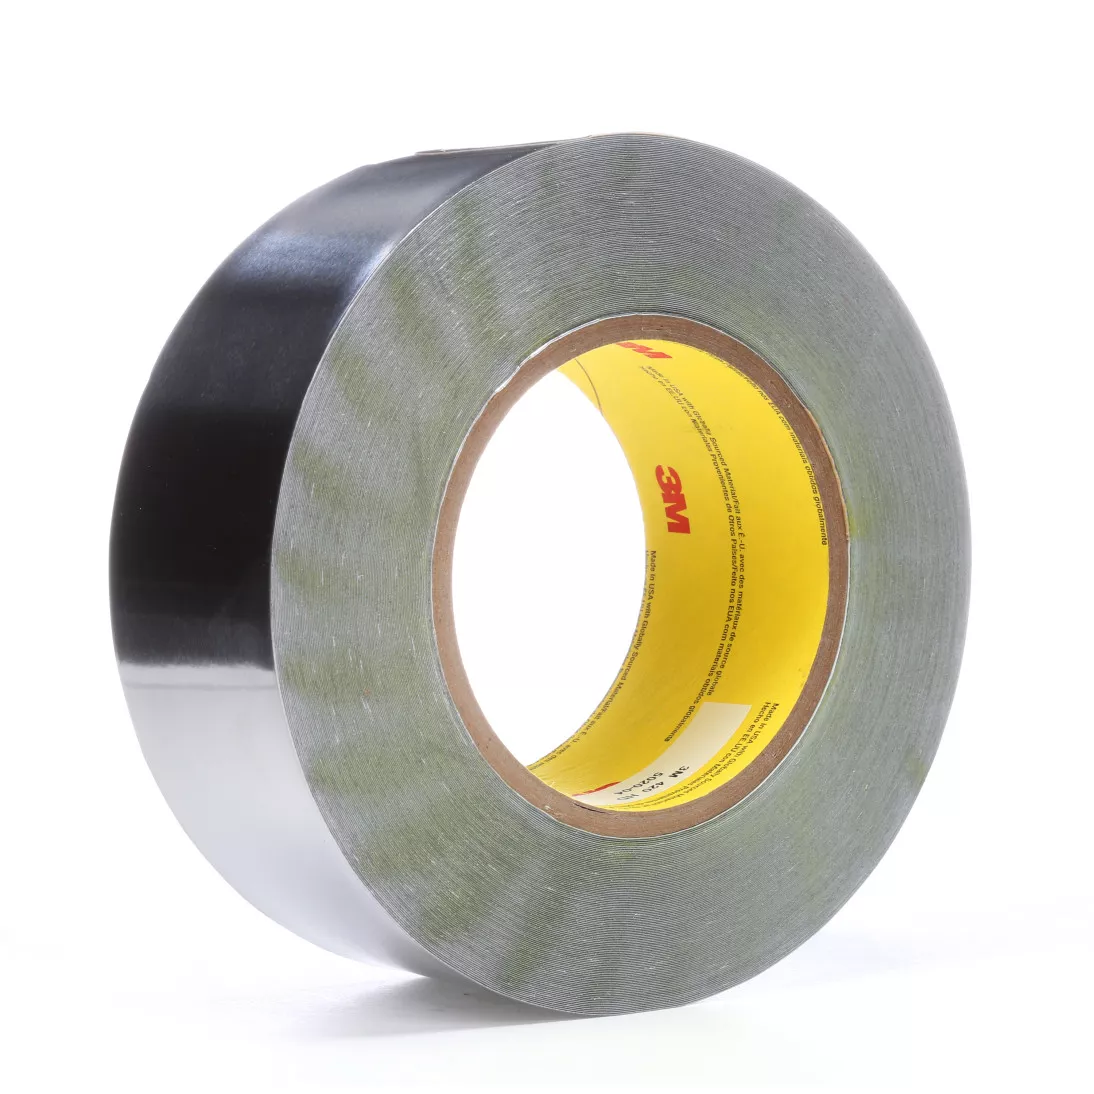 3M™ Lead Foil Tape 420, Dark Silver, 2 in x 36 yd, 6.8 mil, 6 rolls per
case